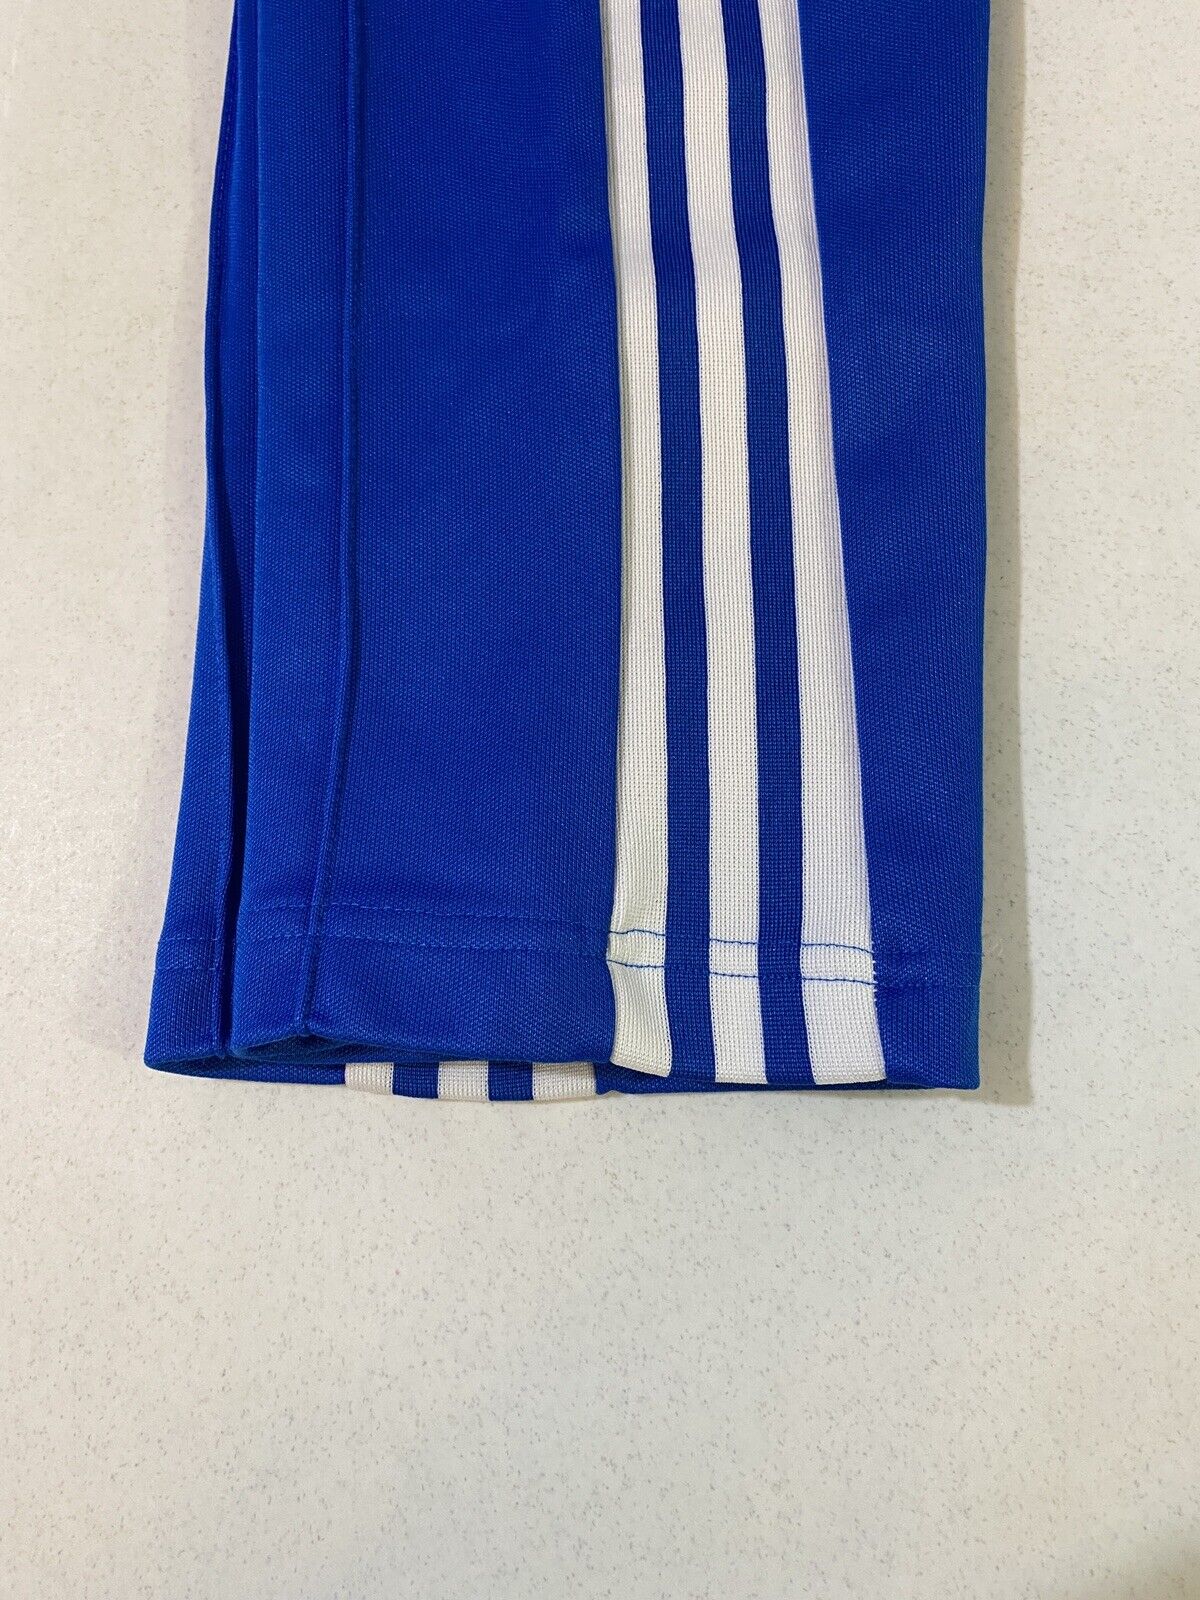 Adidas Originals Beckenbauer Track Pants Blue Bird White Size S H09116